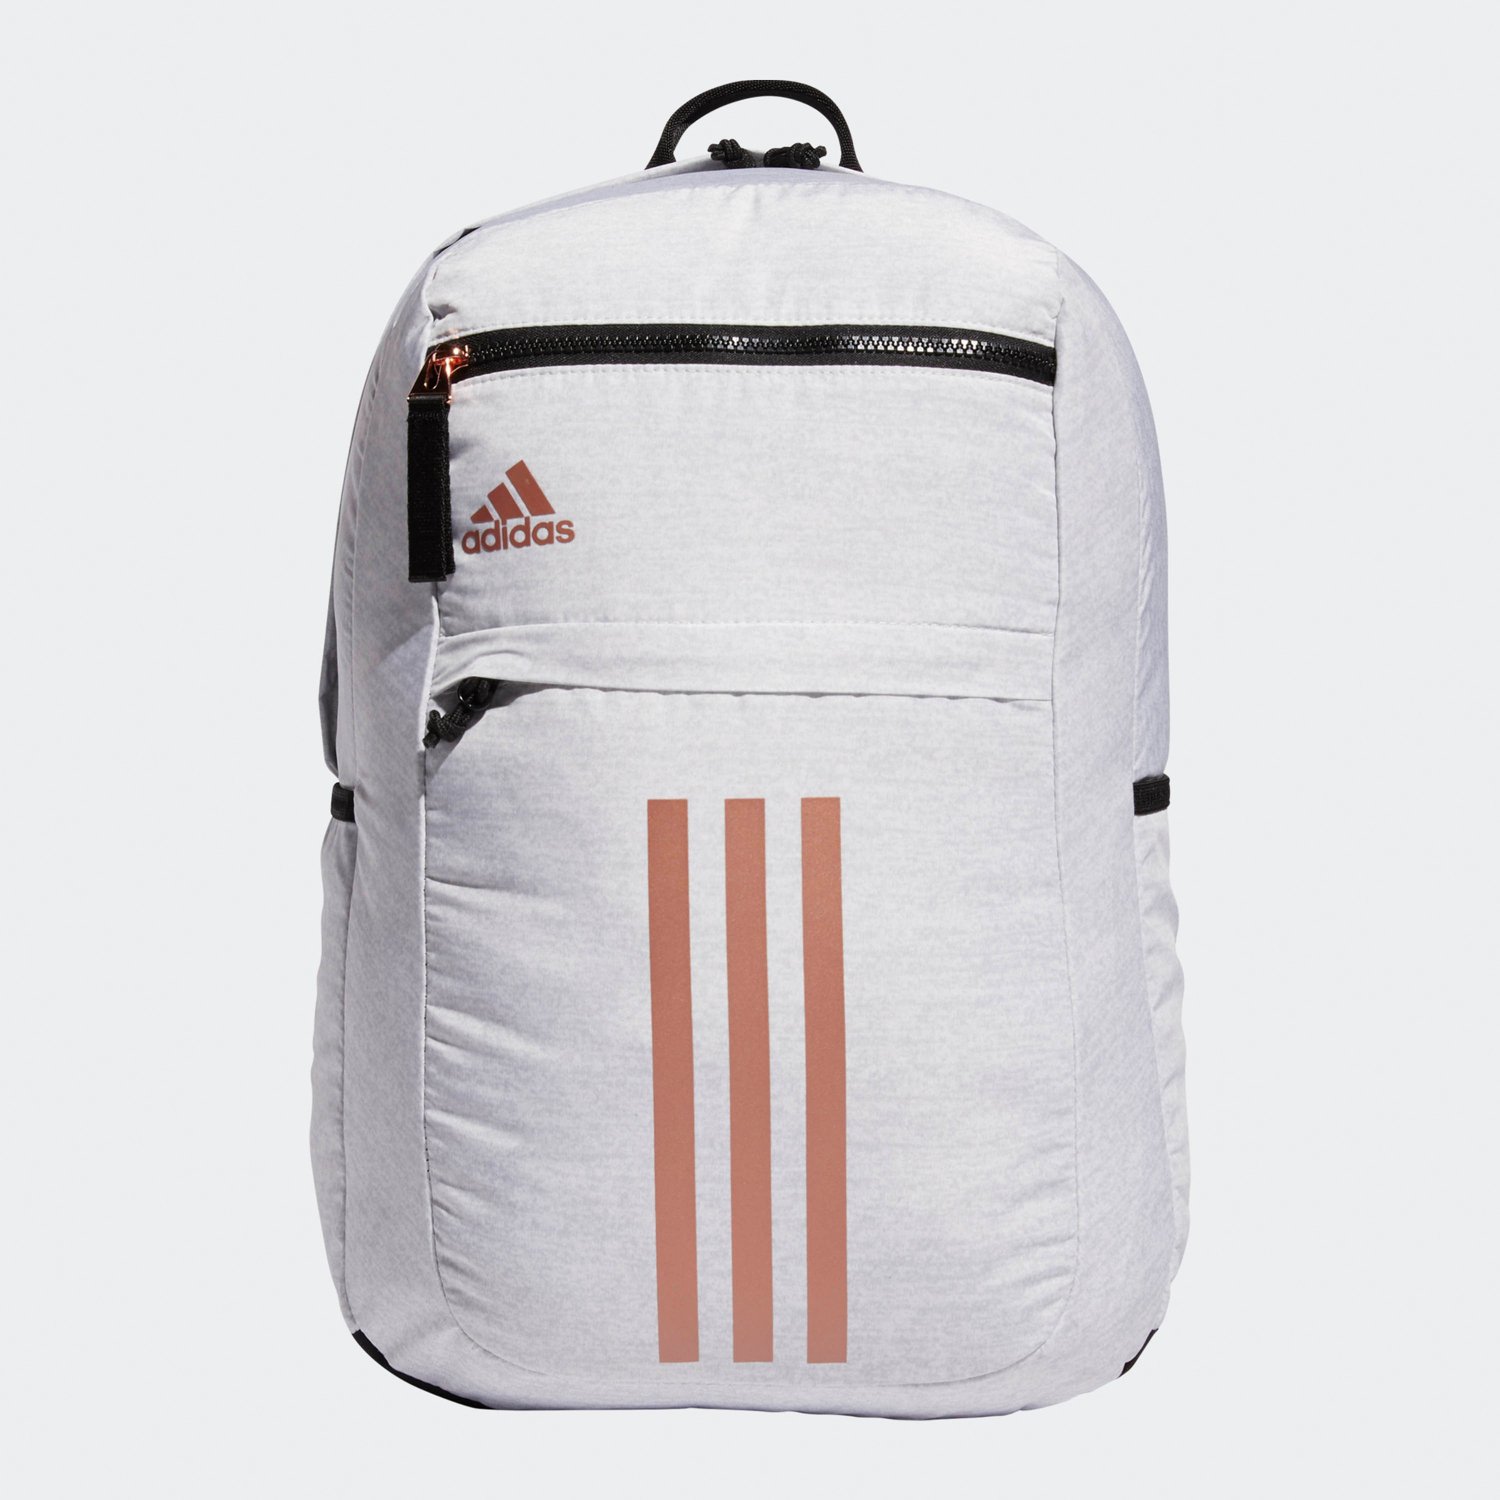 academy backpacks adidas